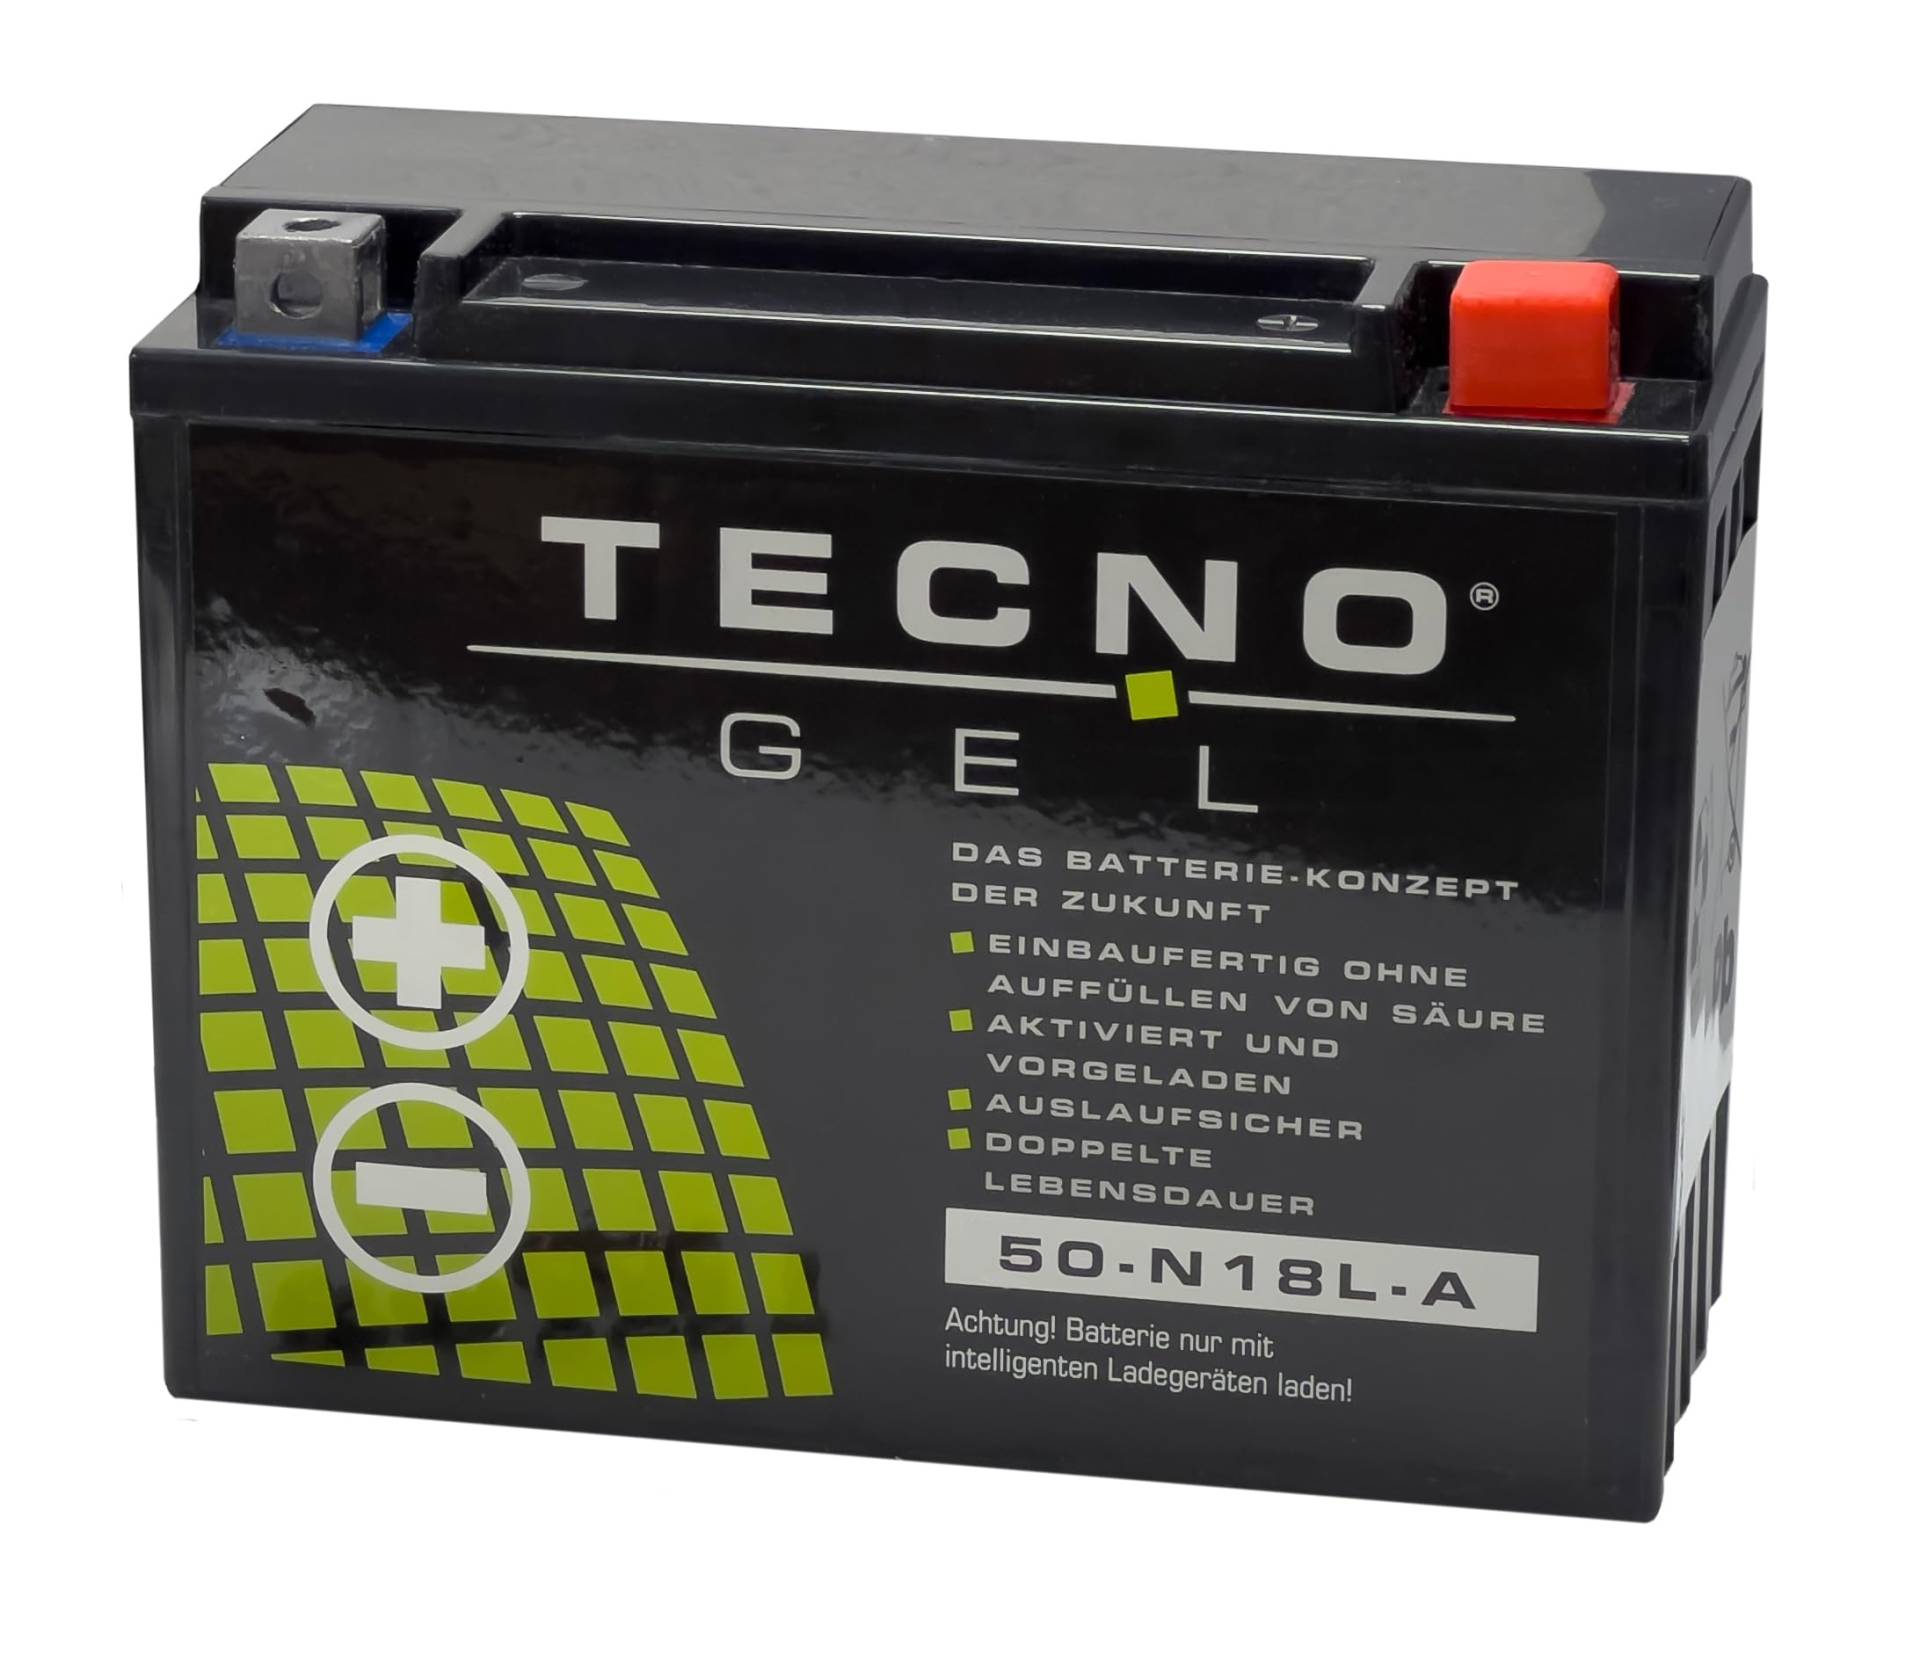 TECNO-GEL Motorrad Qualitäts Batterie Y50-N18L-A für YAMAHA XVZ 1200/1300 TD 1984-1992, 12V Gel-Batterie 20 Ah (DIN 52016), 205x90x160 mm von Wirth-Federn